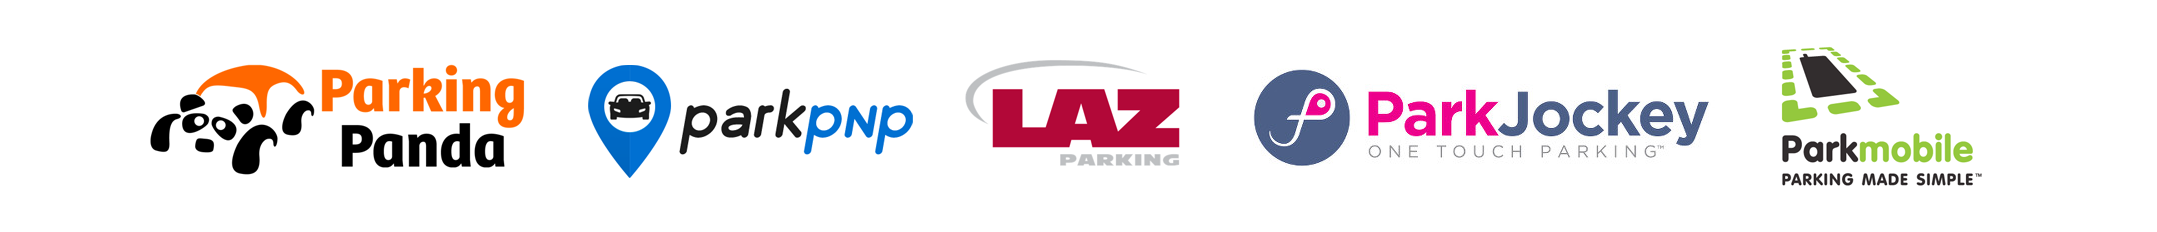 Parking Panda, ParkPNP, LAZ Parking, Park Jockey, Parkmobile